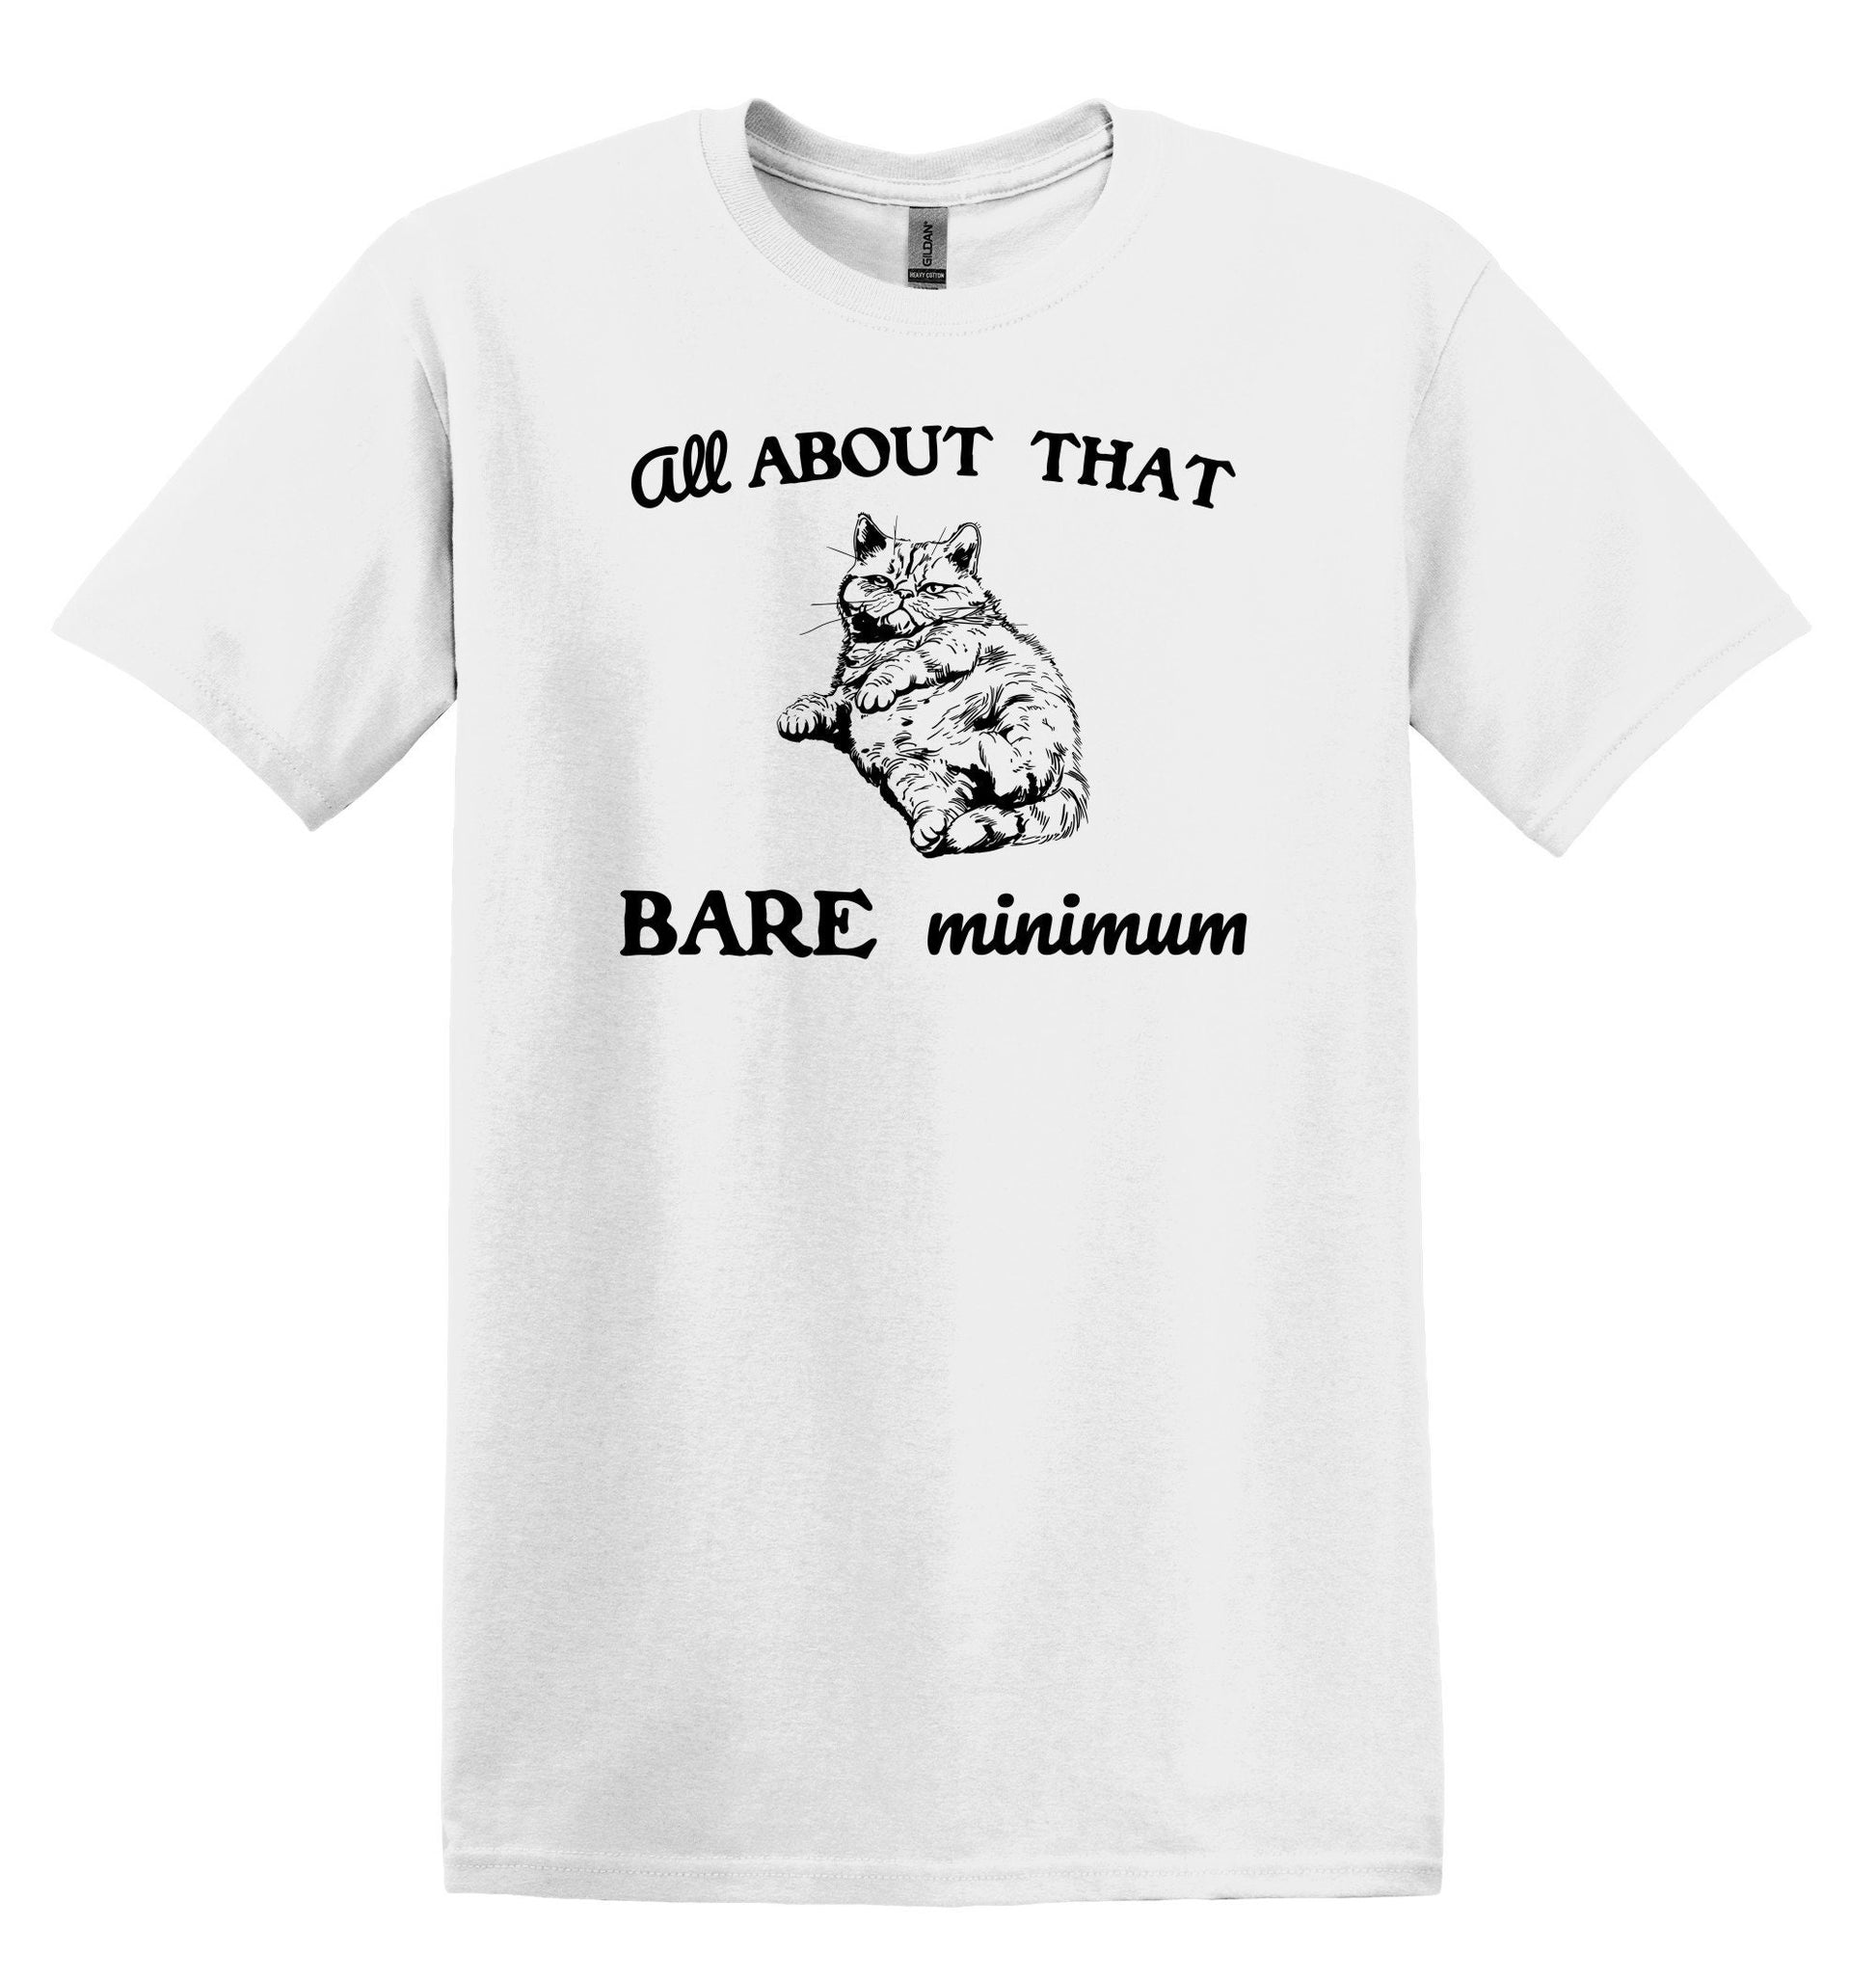 All About That Bare Minimum Shirt Graphic Funny Shirt Vintage Funny Shirt Nostalgia Shirt Relaxed Shirt Minimalist Gag Shirt Meme Shirt